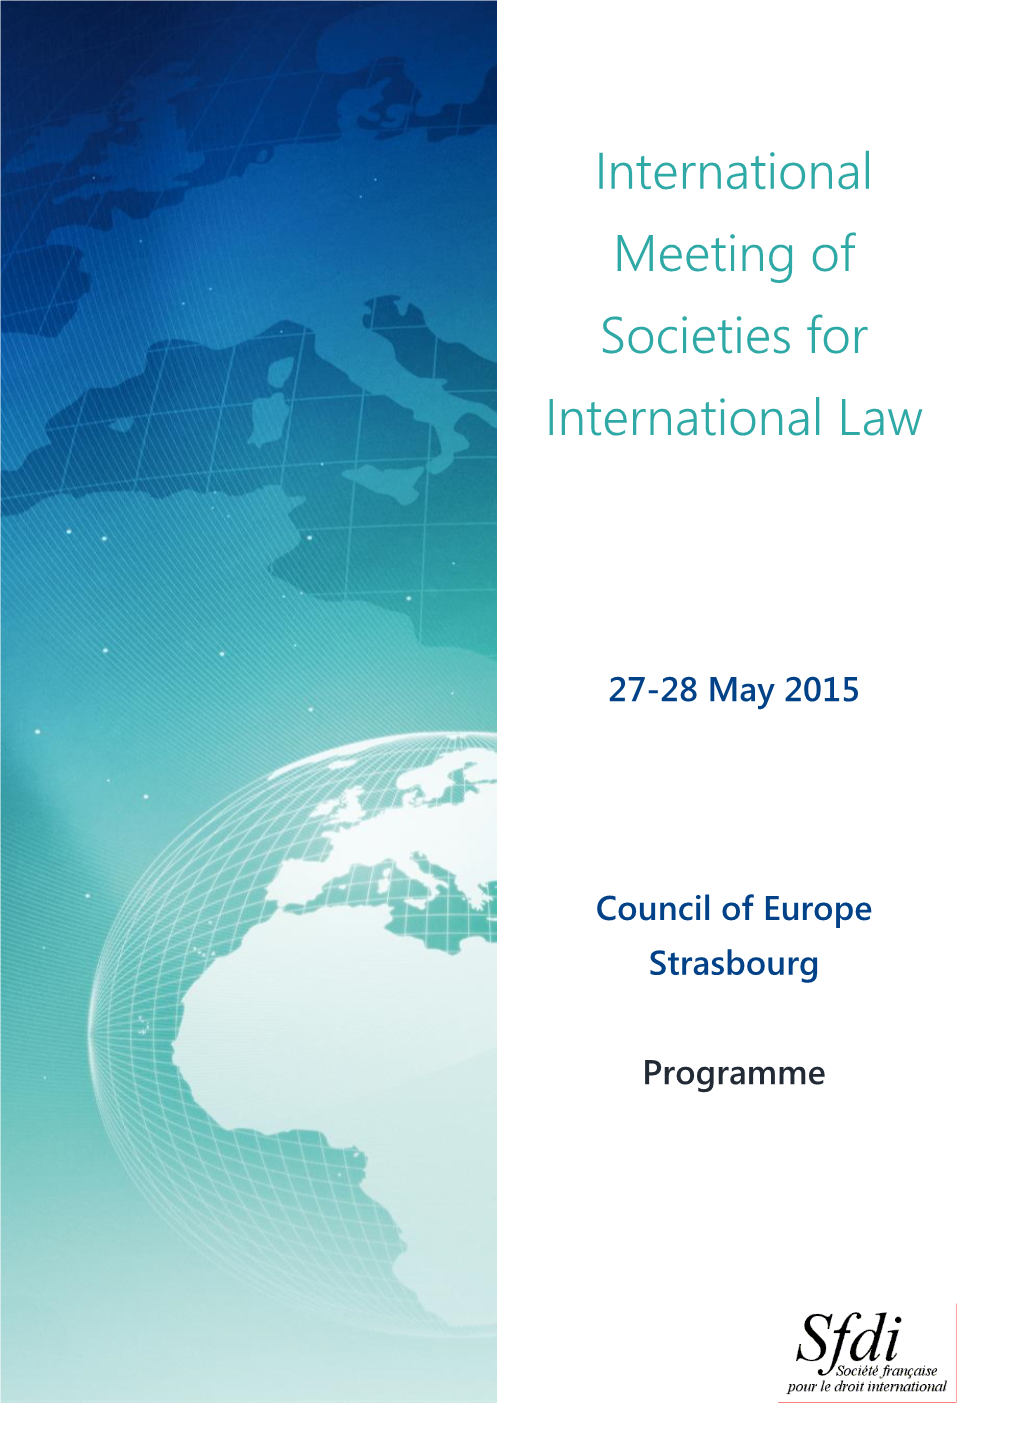 International Meeting of Societies for International Law